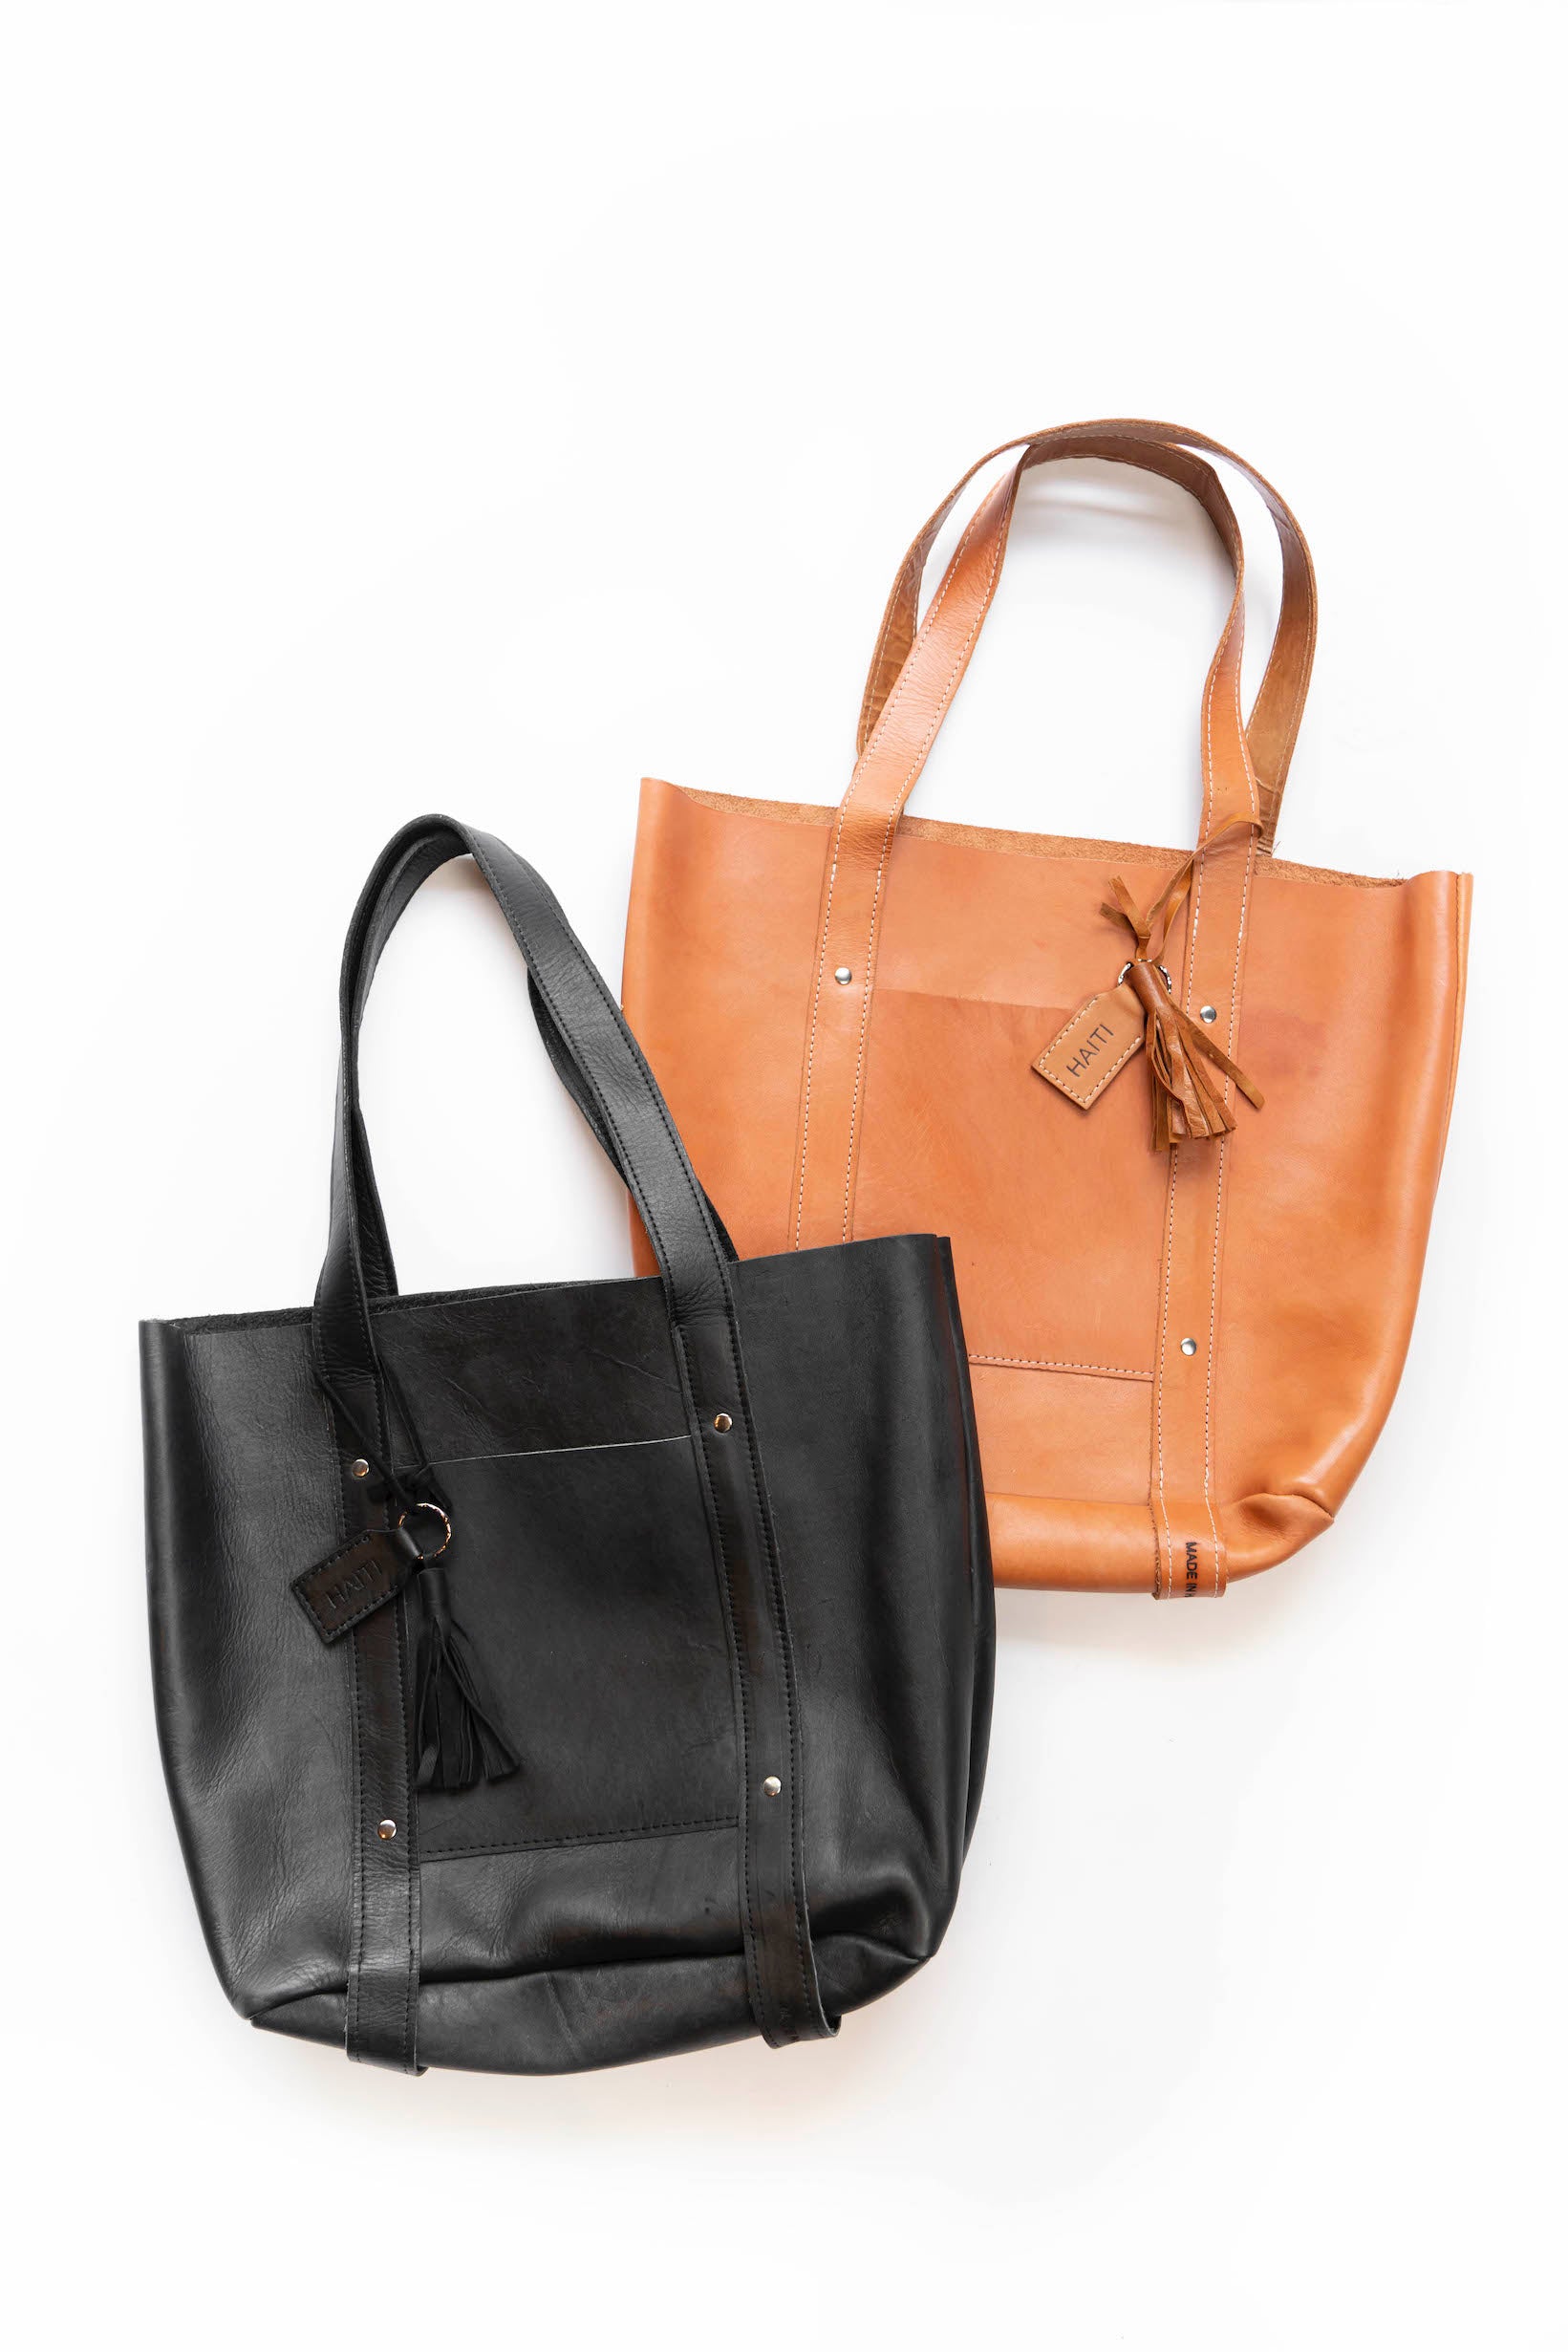 2015 Designer Handbags High Quality Famous Brand Women Leather V Bag  Fashion Shoulder Bag - AliExpress